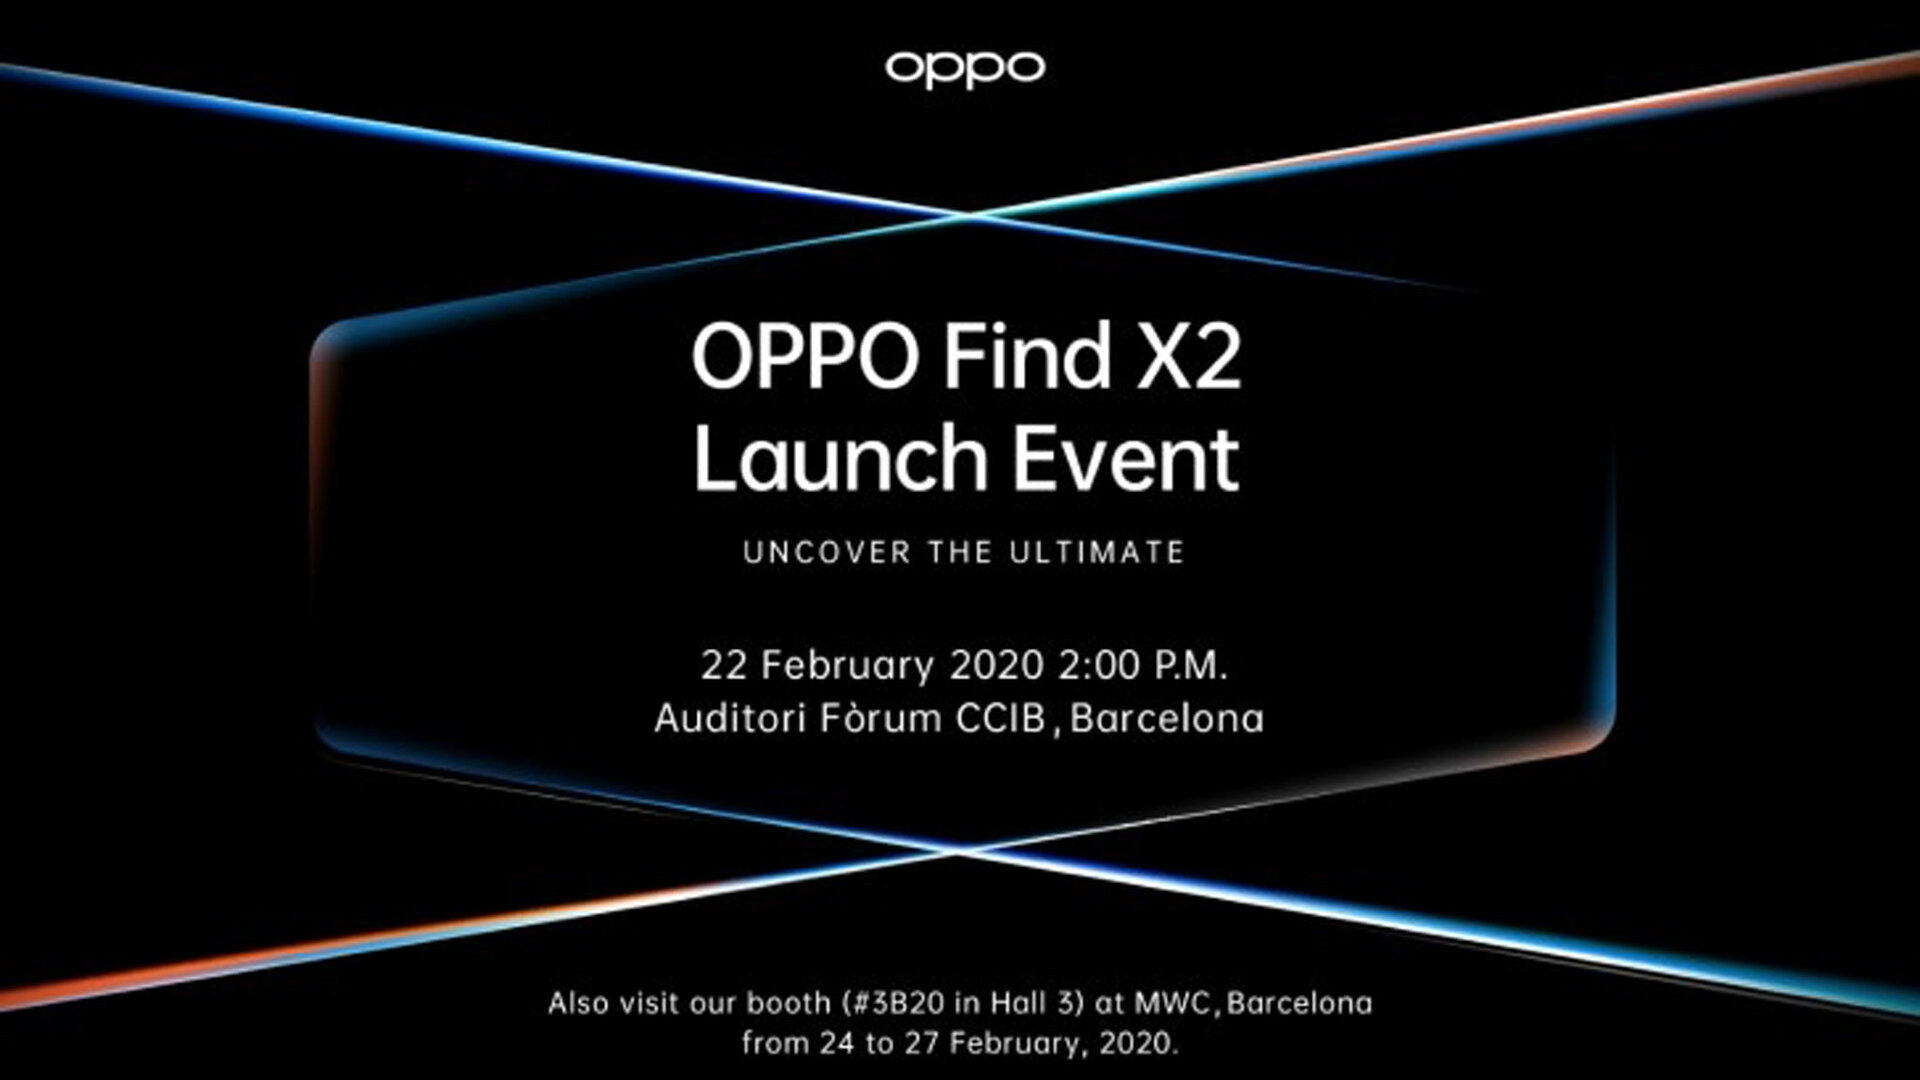 Pengumuman Oppo Find X2